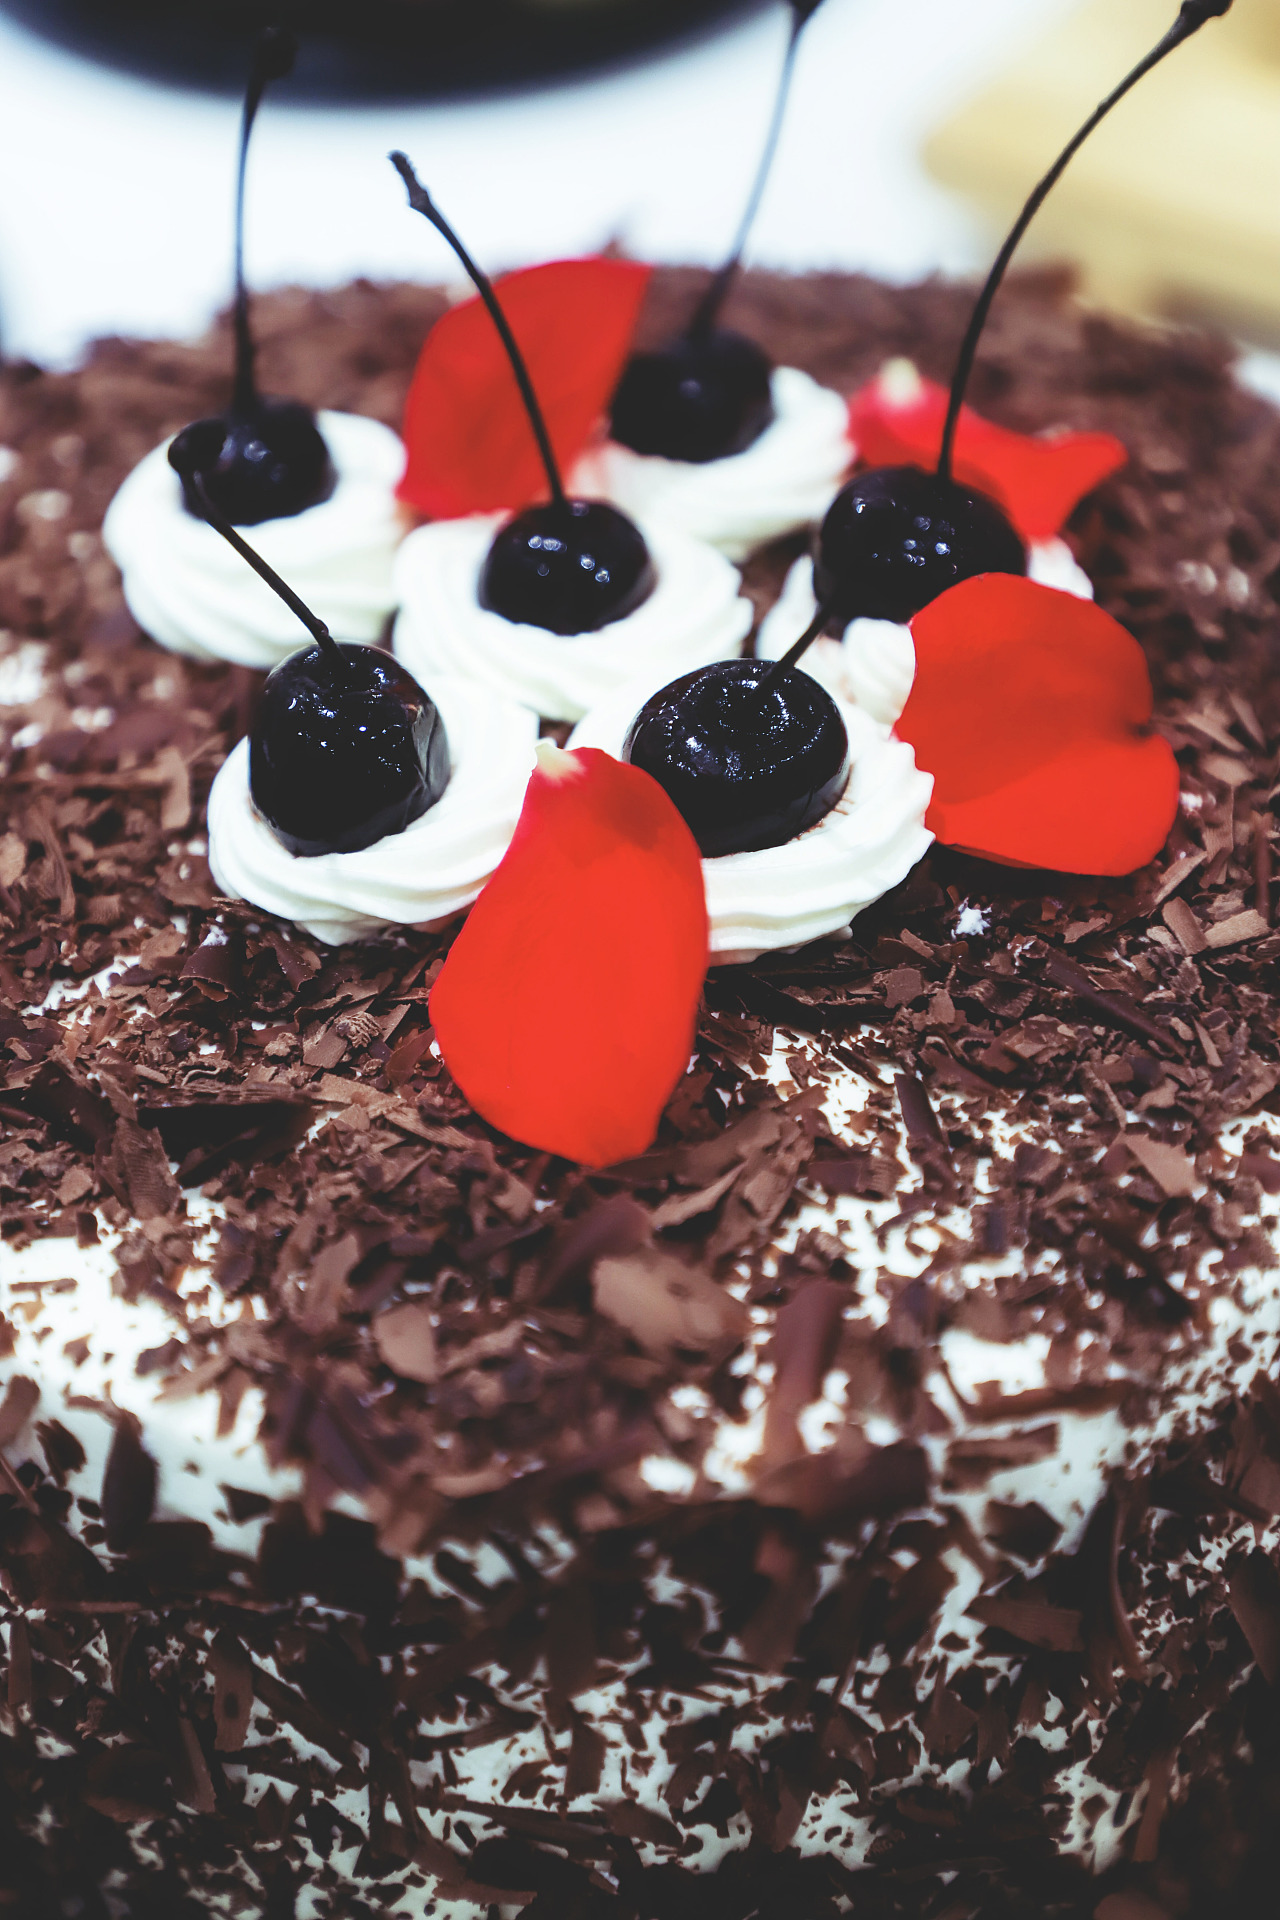 Lucky Inn: 黑森林蛋糕 Black Forest Cake